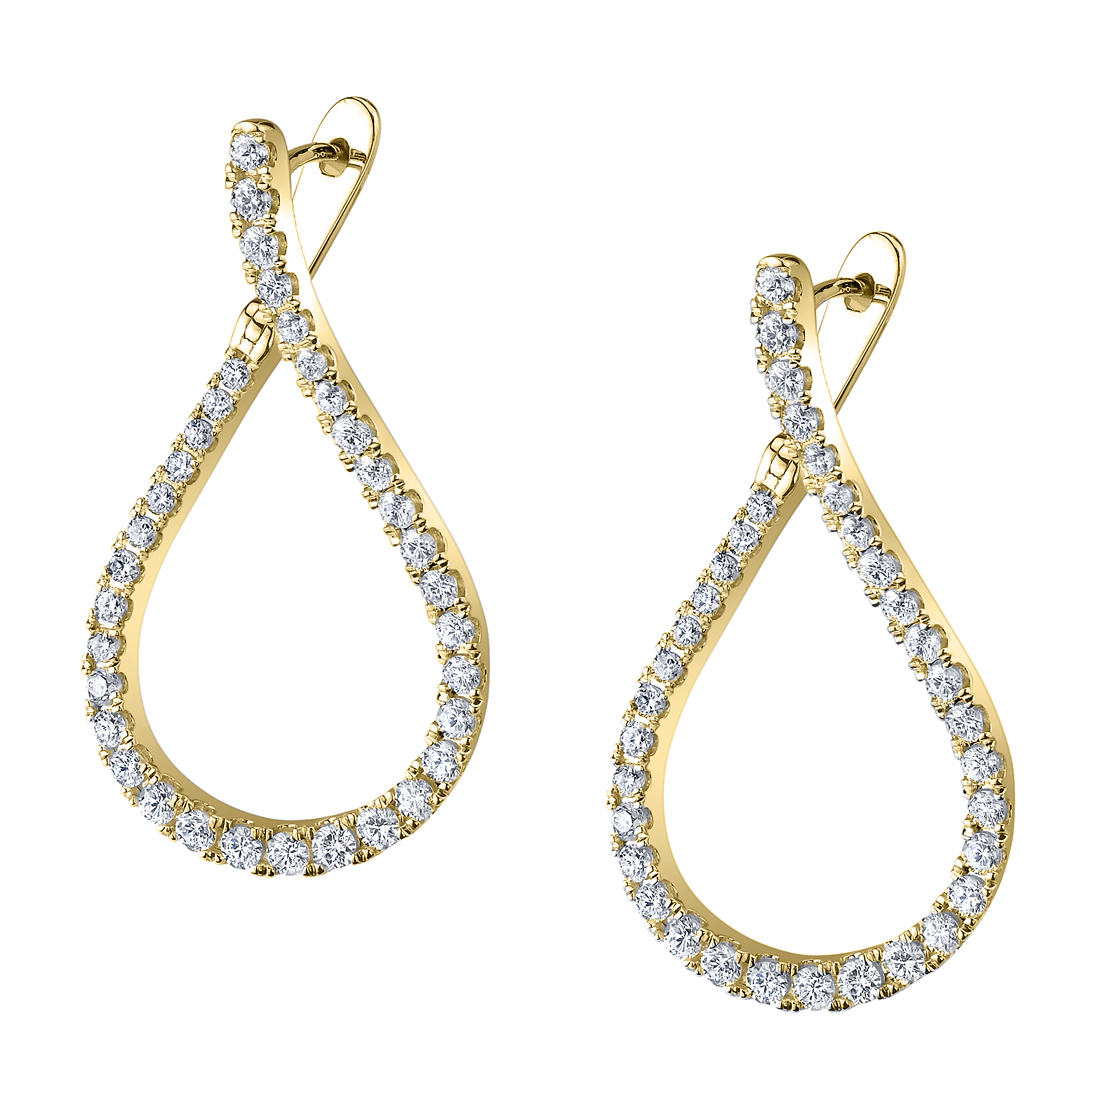 Unique Diamond Hoop Earrings in Yellow Gold